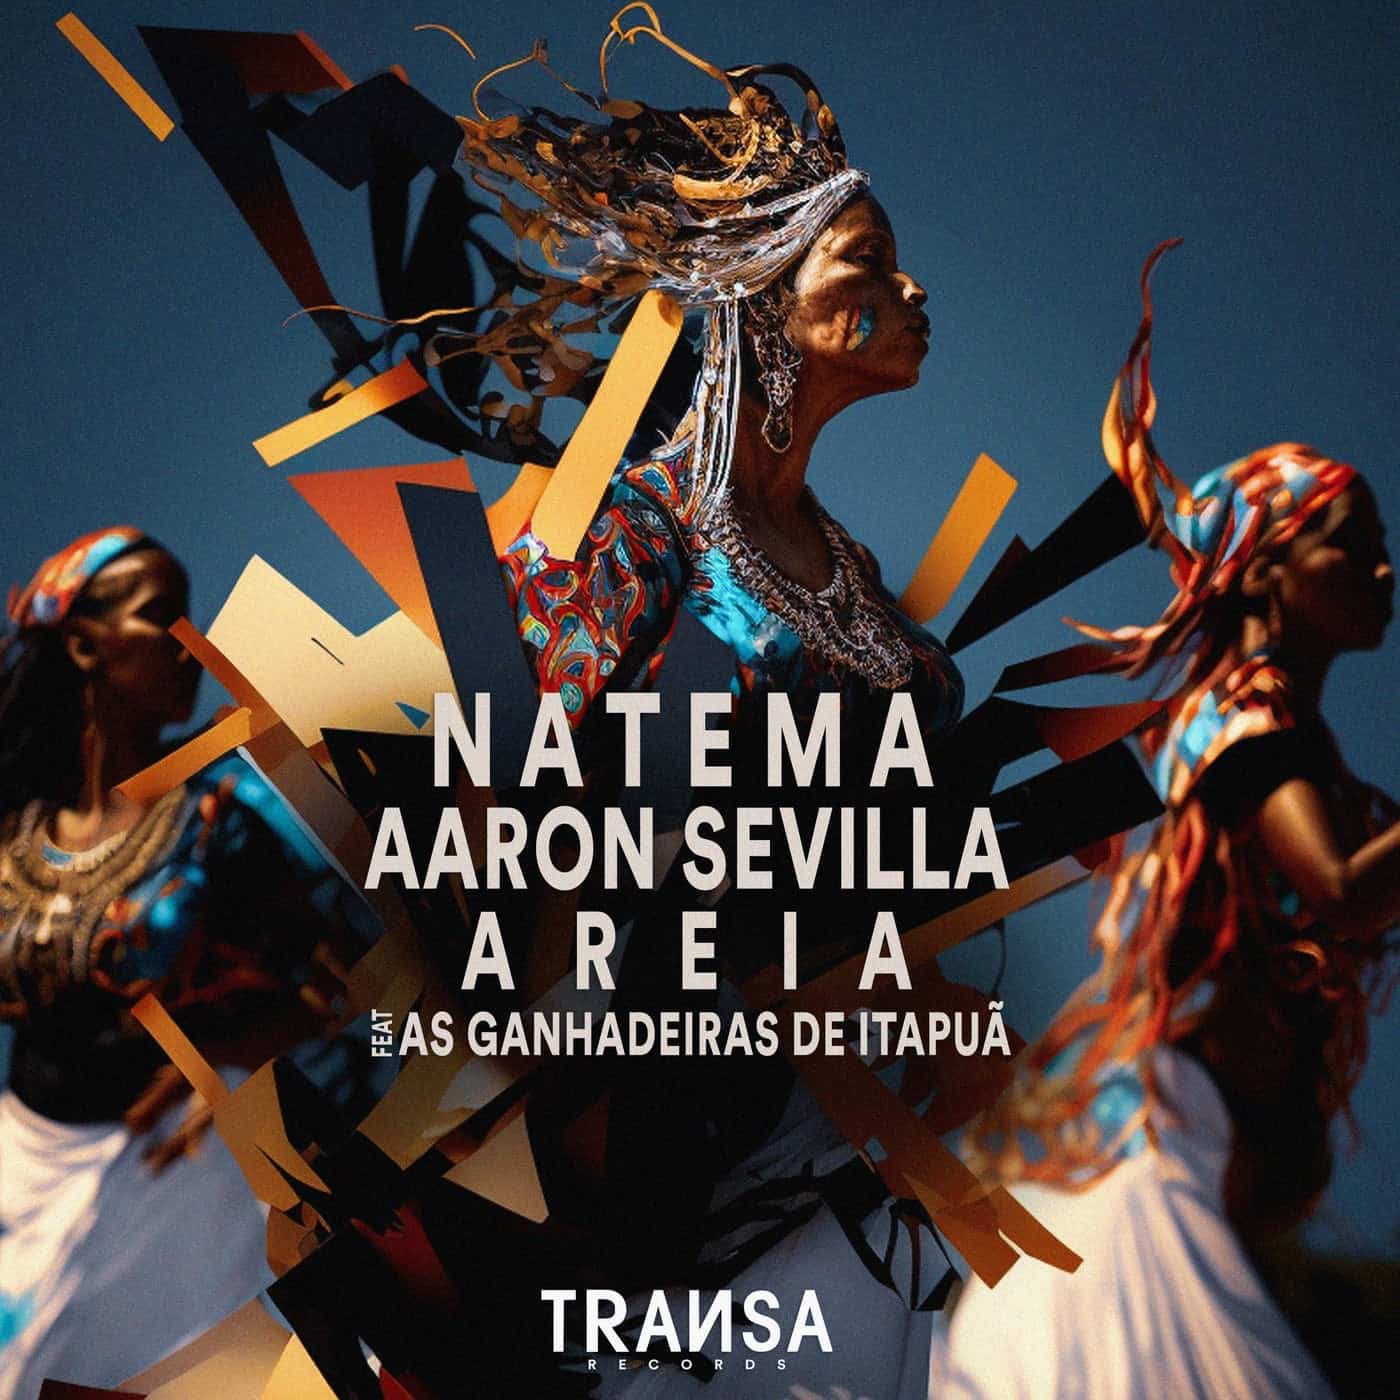 image cover: Natema, Aaron Sevilla, As Ganhadeiras de Itapuã - Areia feat As Ganhadeiras de Itapuã / TRANSA468